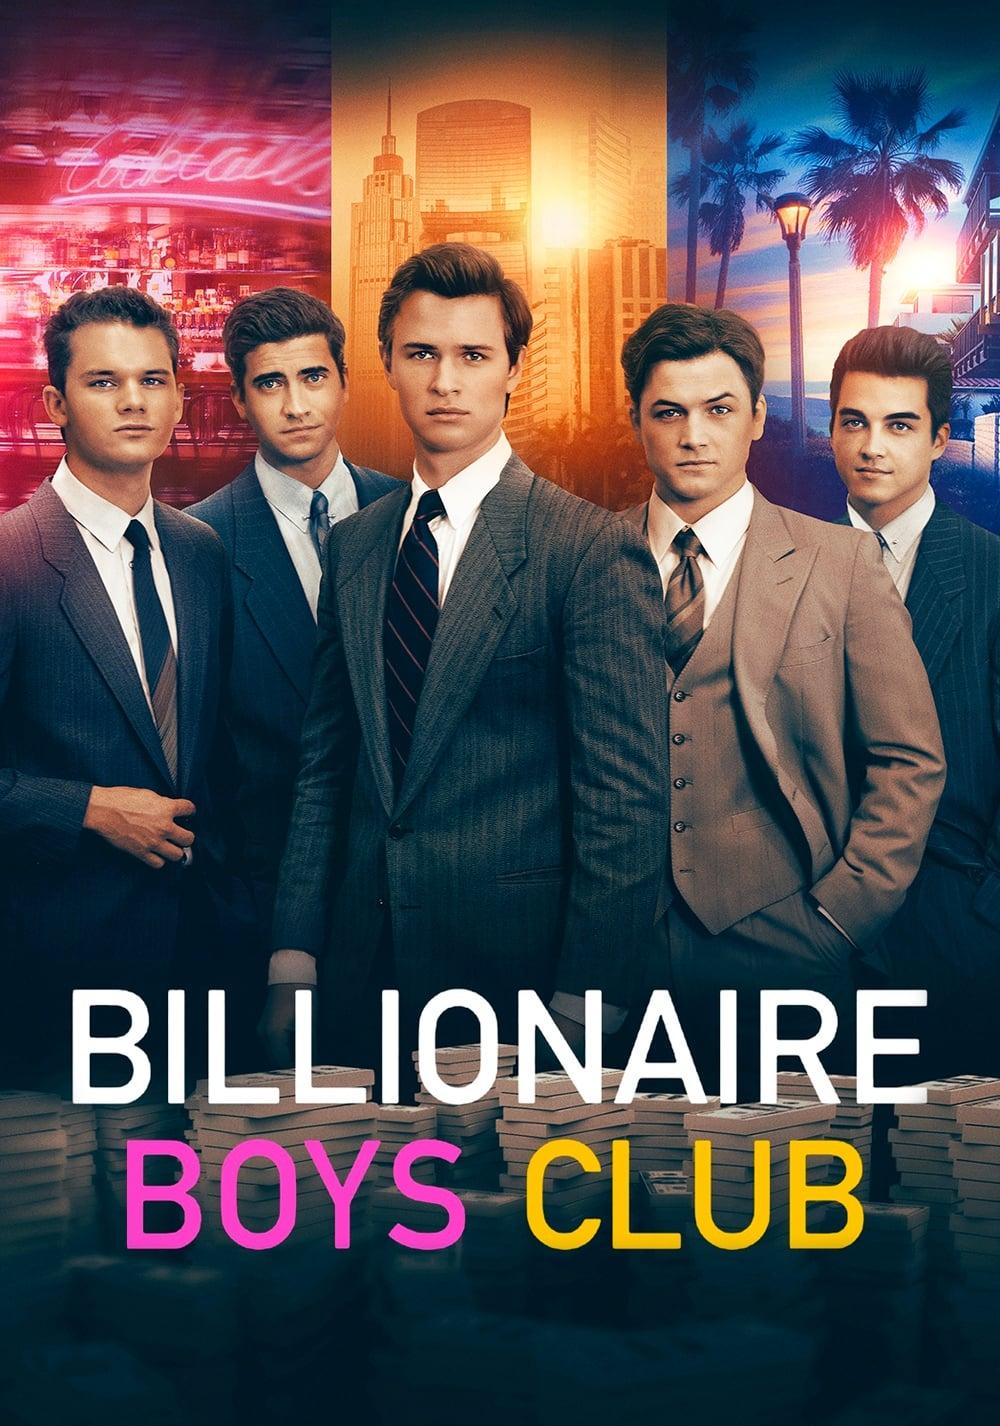 Billionaire Boys Club poster